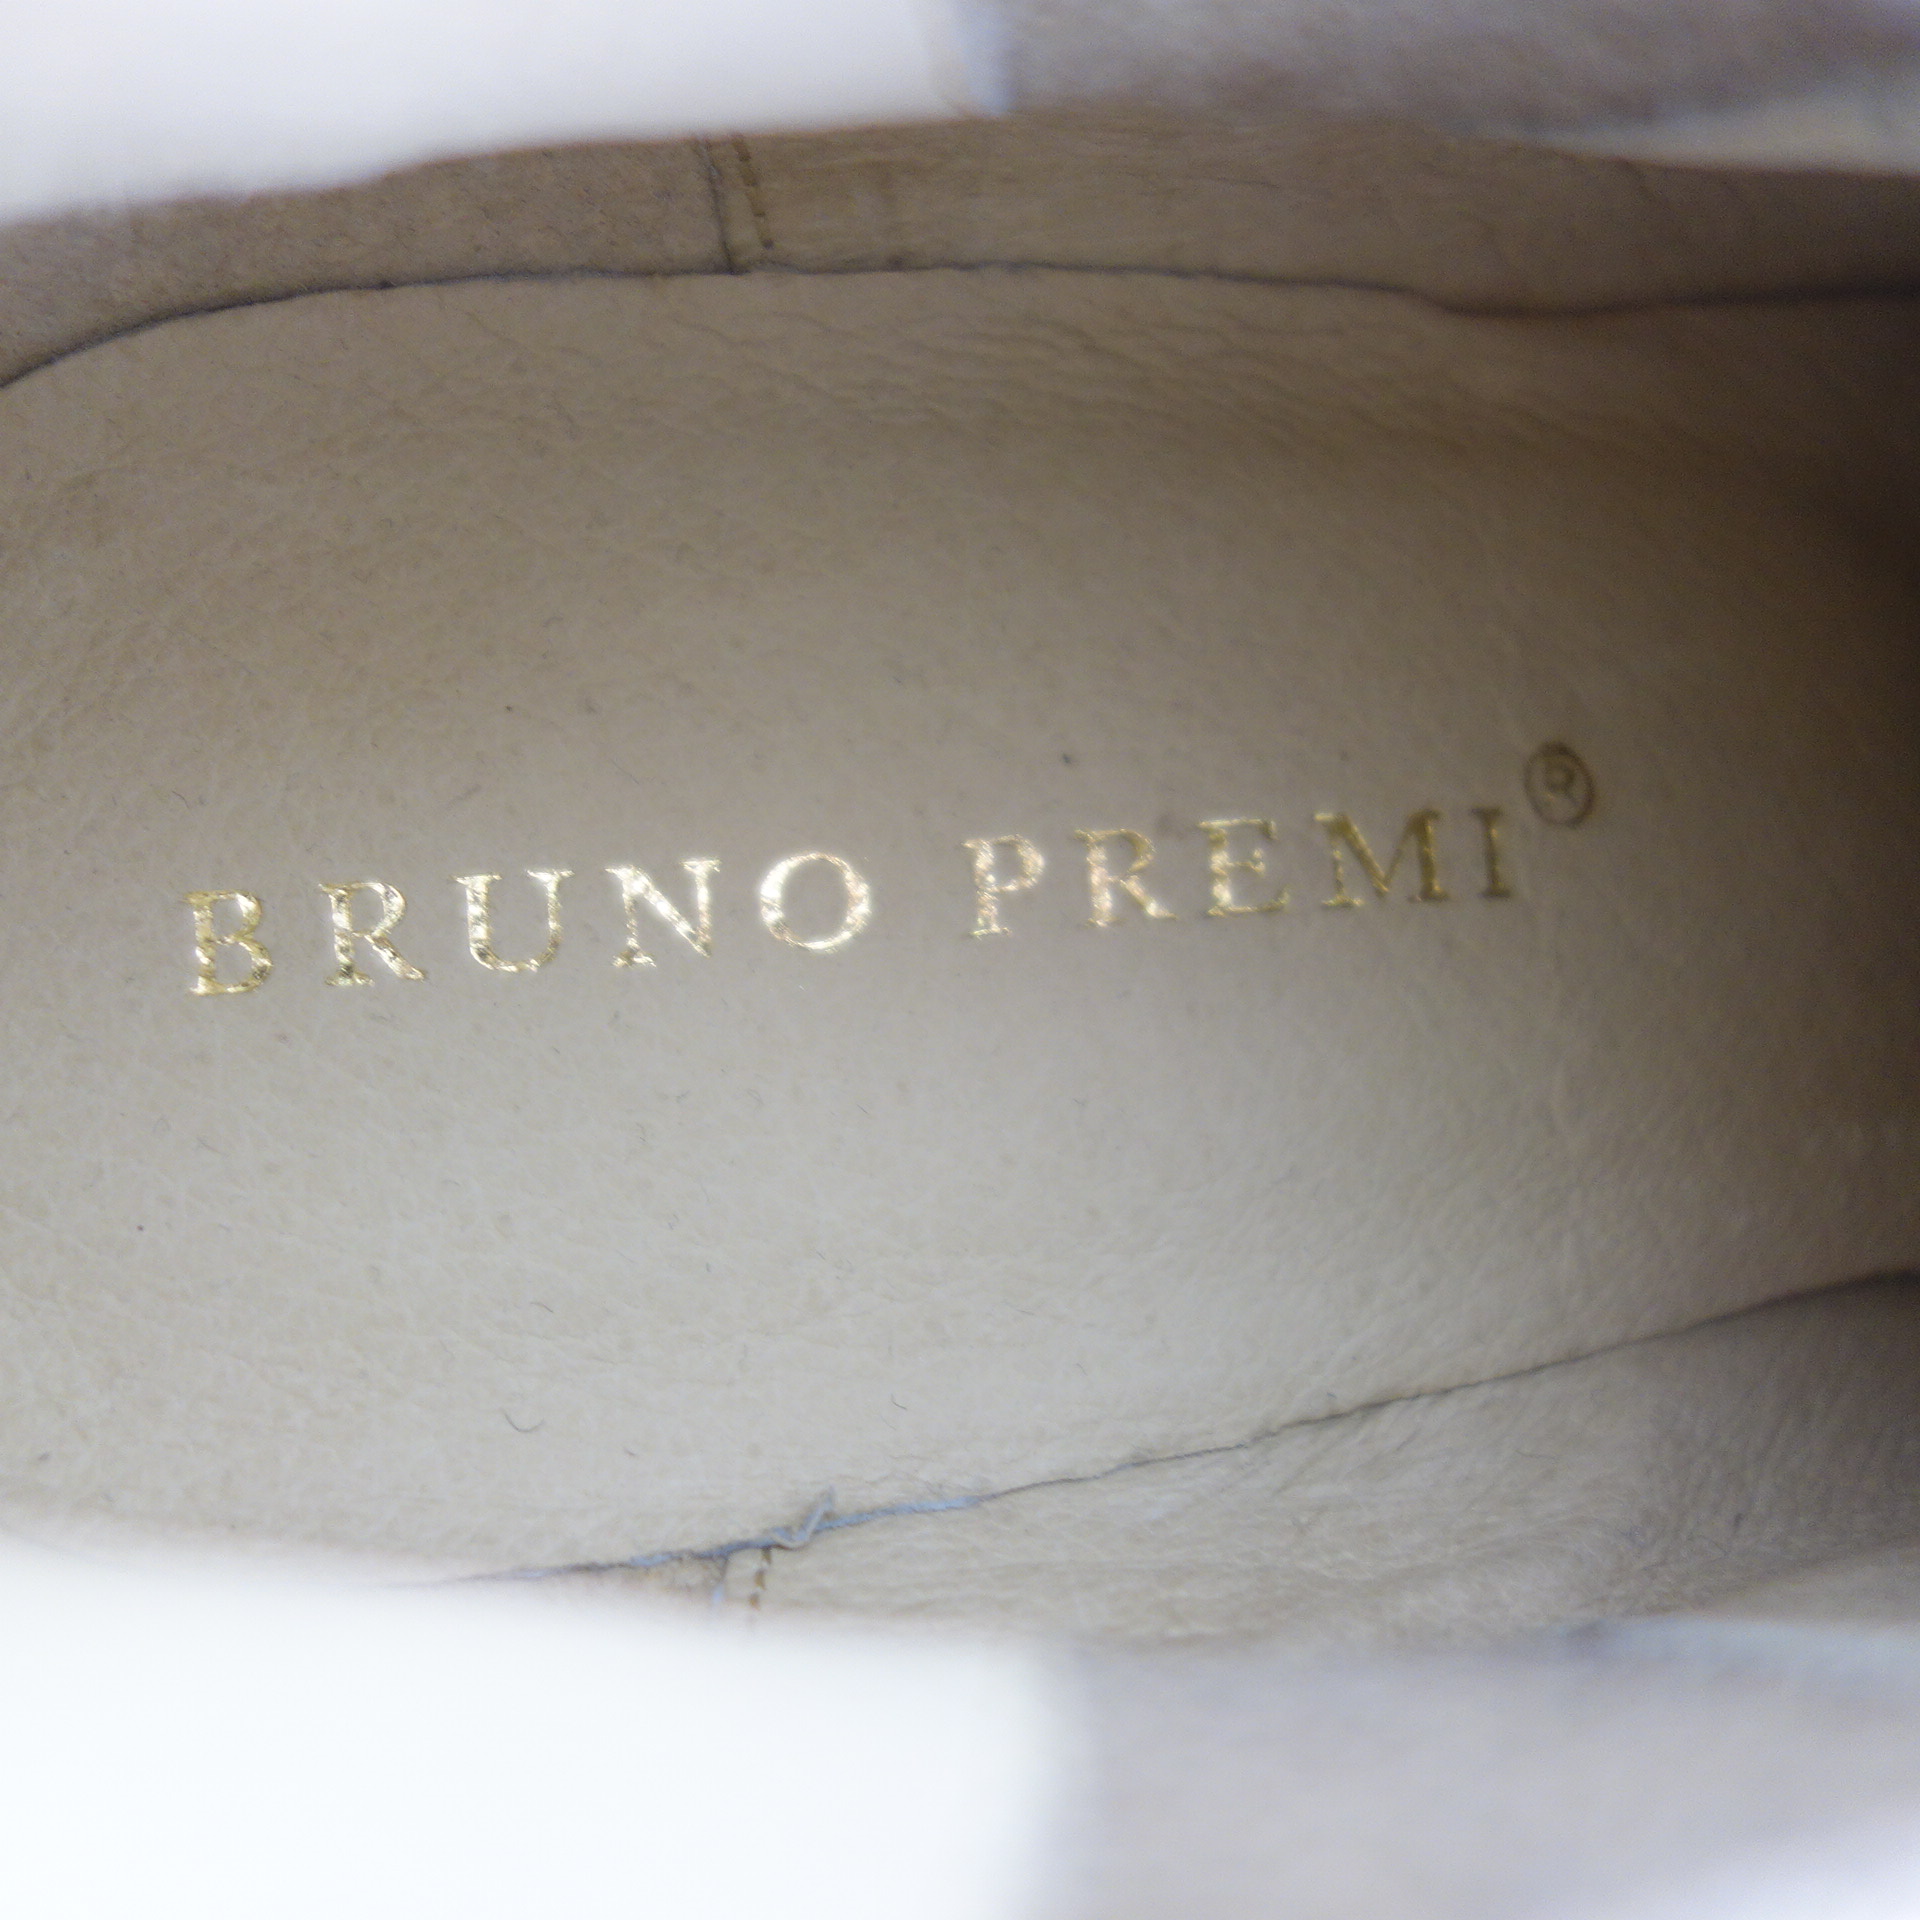 BRUNO PREMI Damen Schuhe Chelsea Ankle Boots Stiefeletten Stiefel Leder Grau Größe 41 ( 40 )